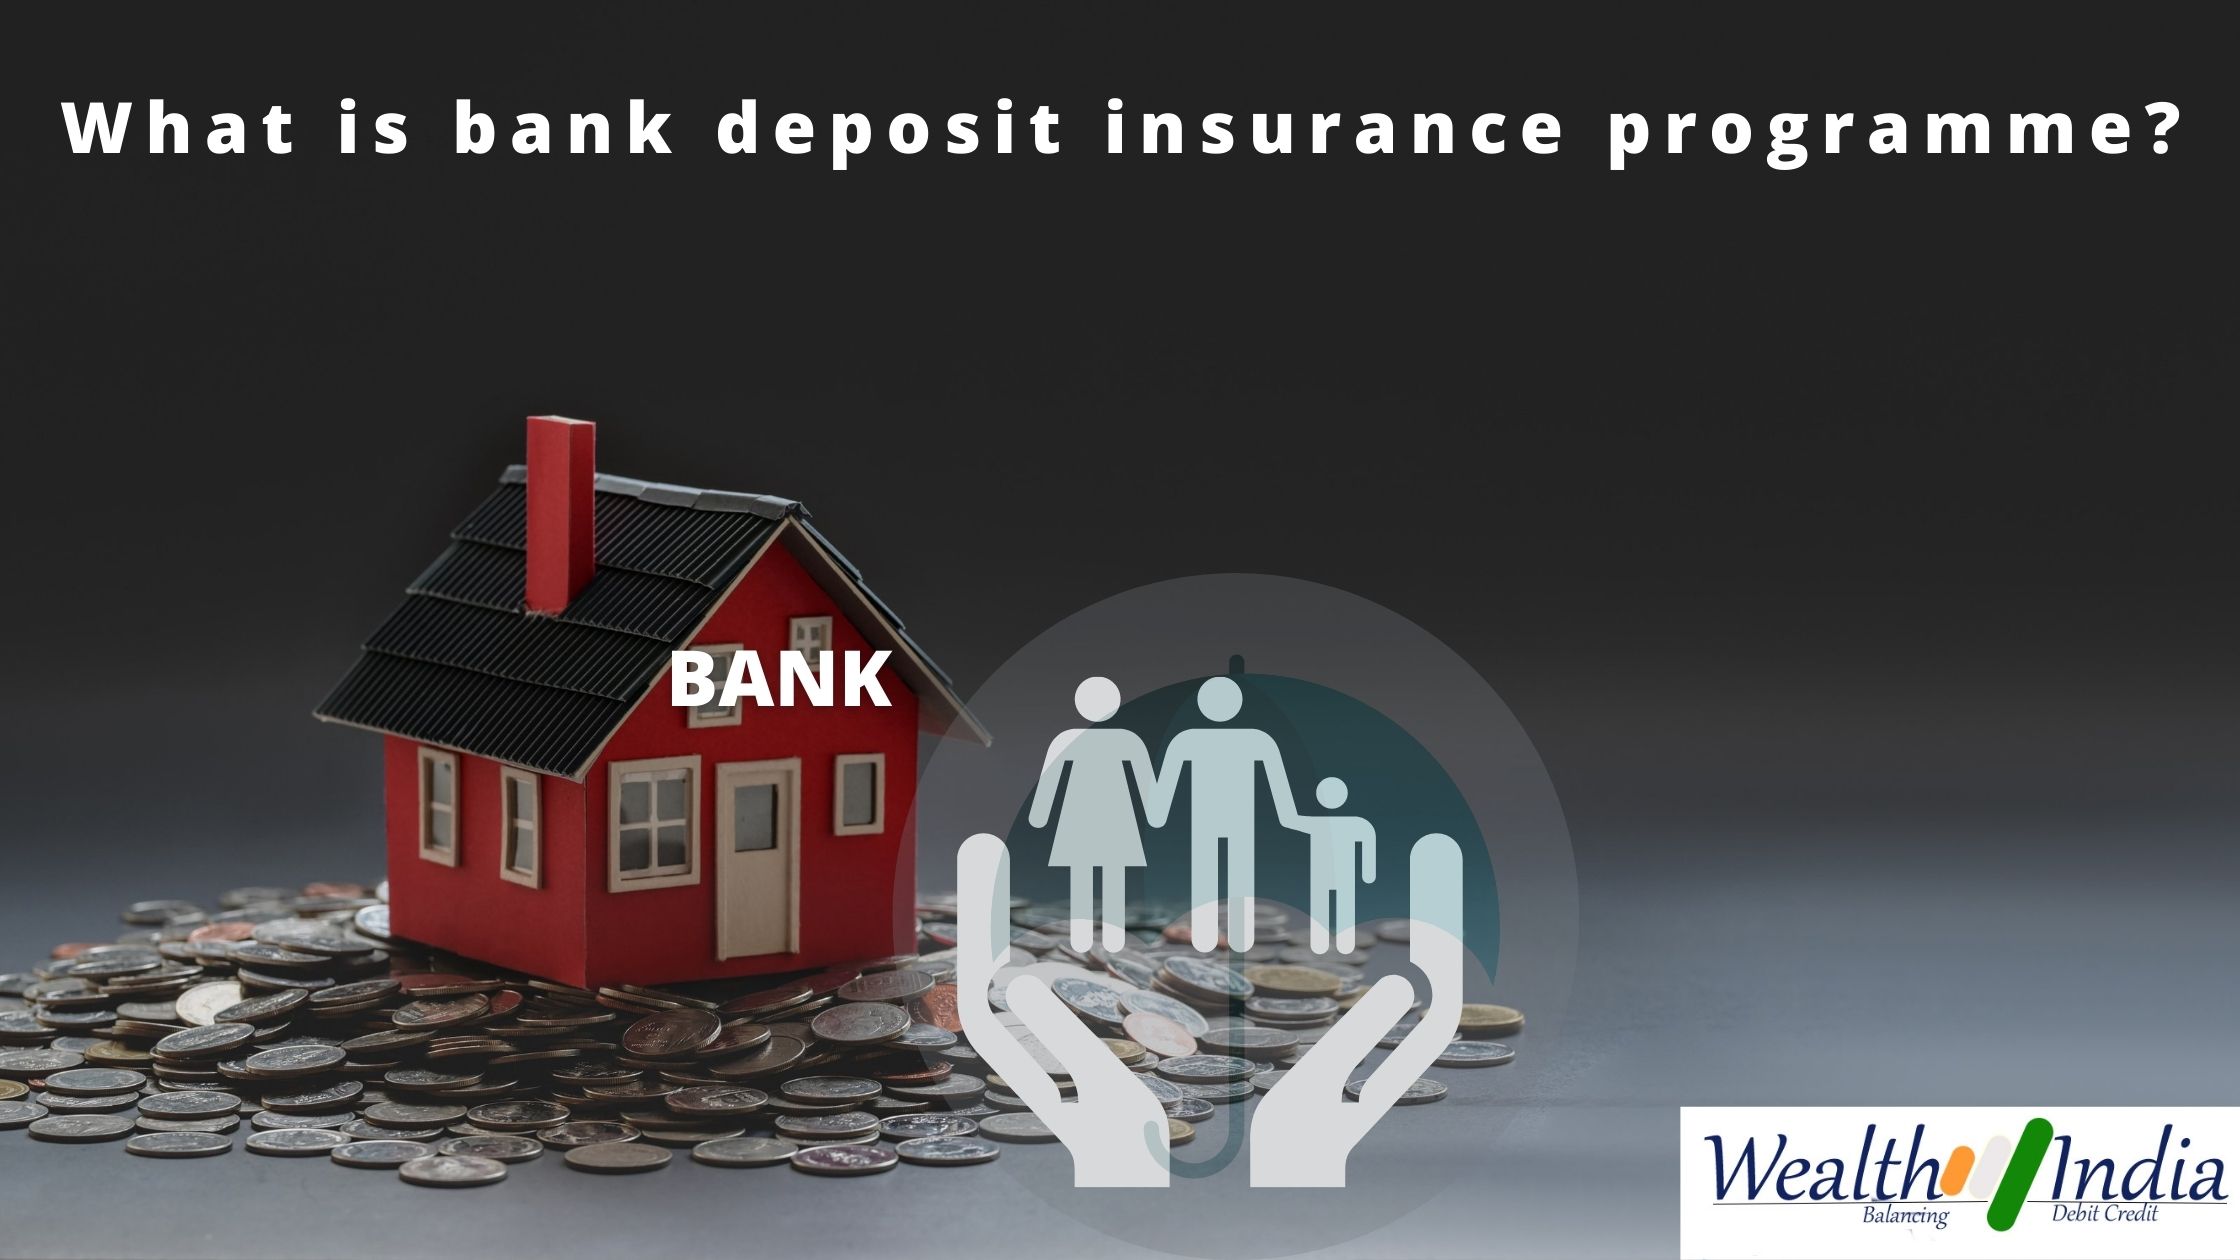 Bank deposit insurance programme